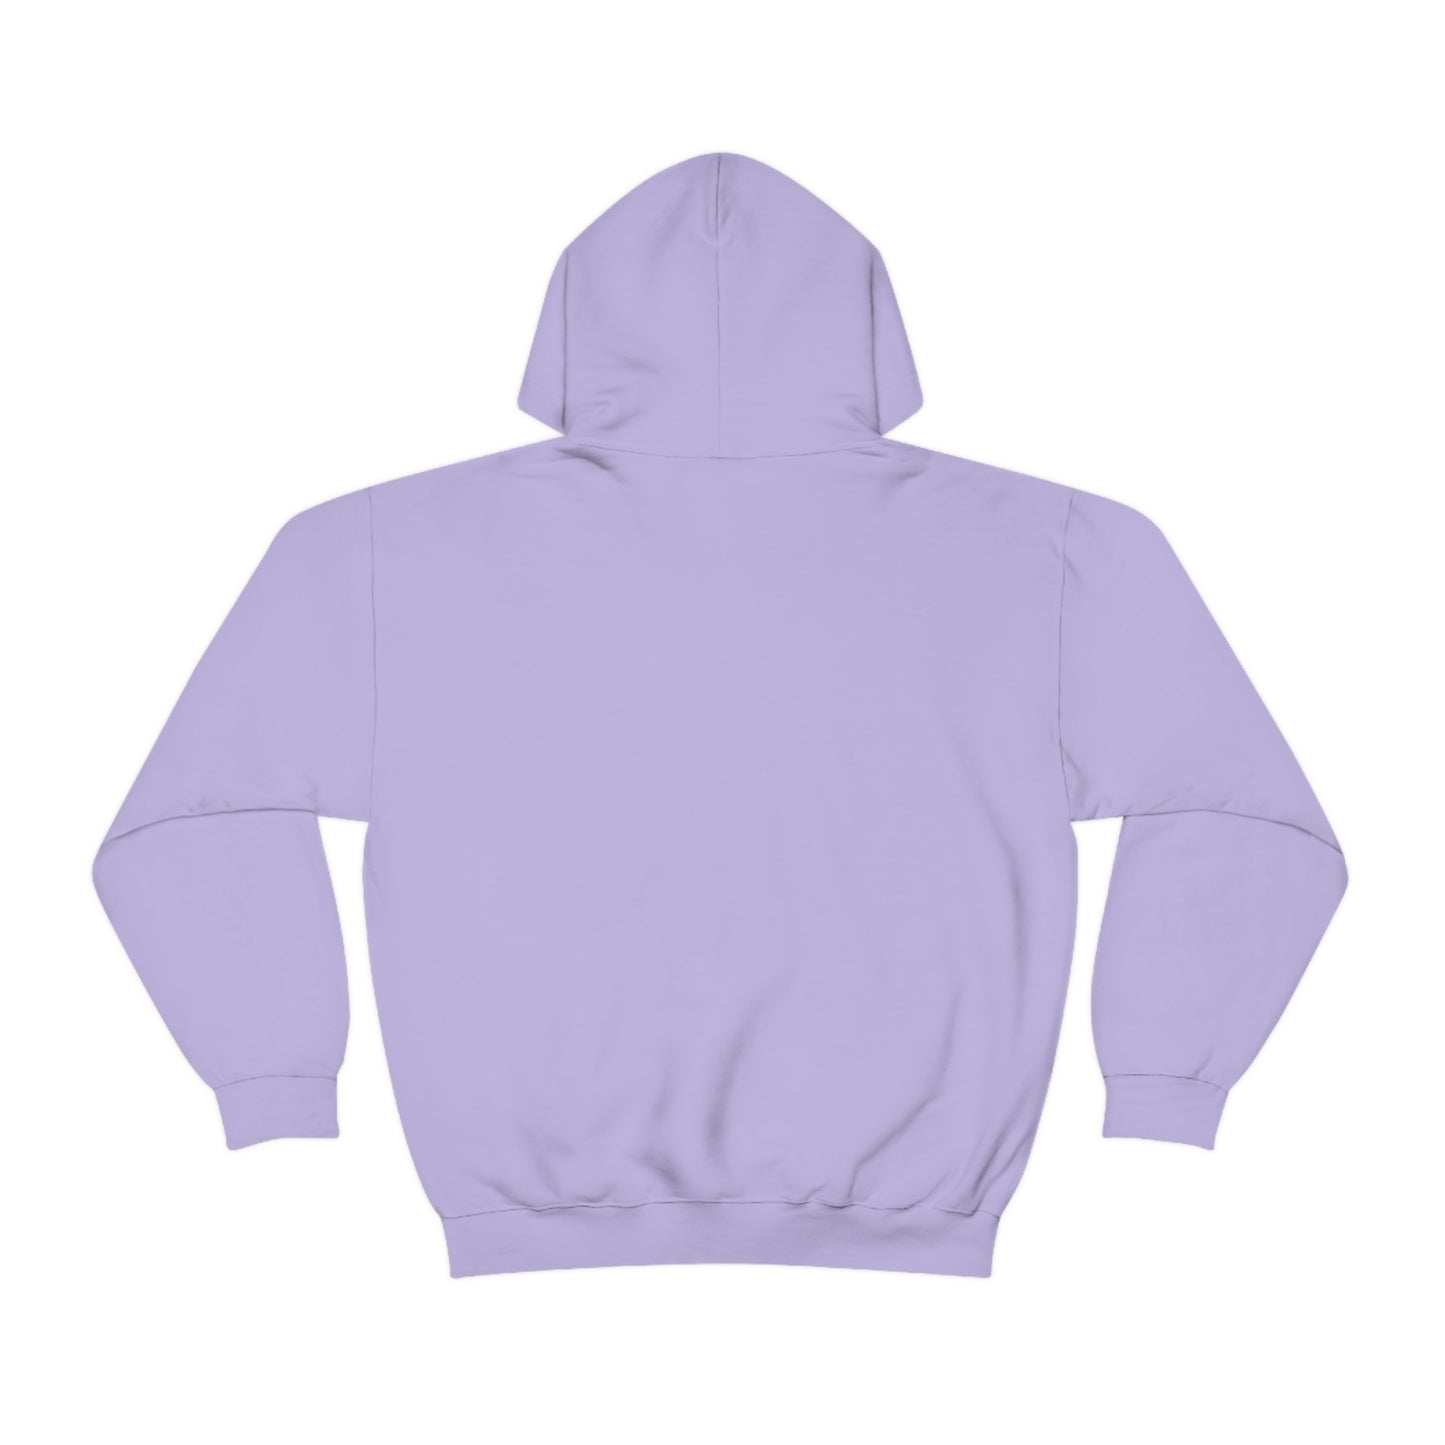 Full Speed Ahead Unisex Heavy Blend™ Hooded Sweatshirt